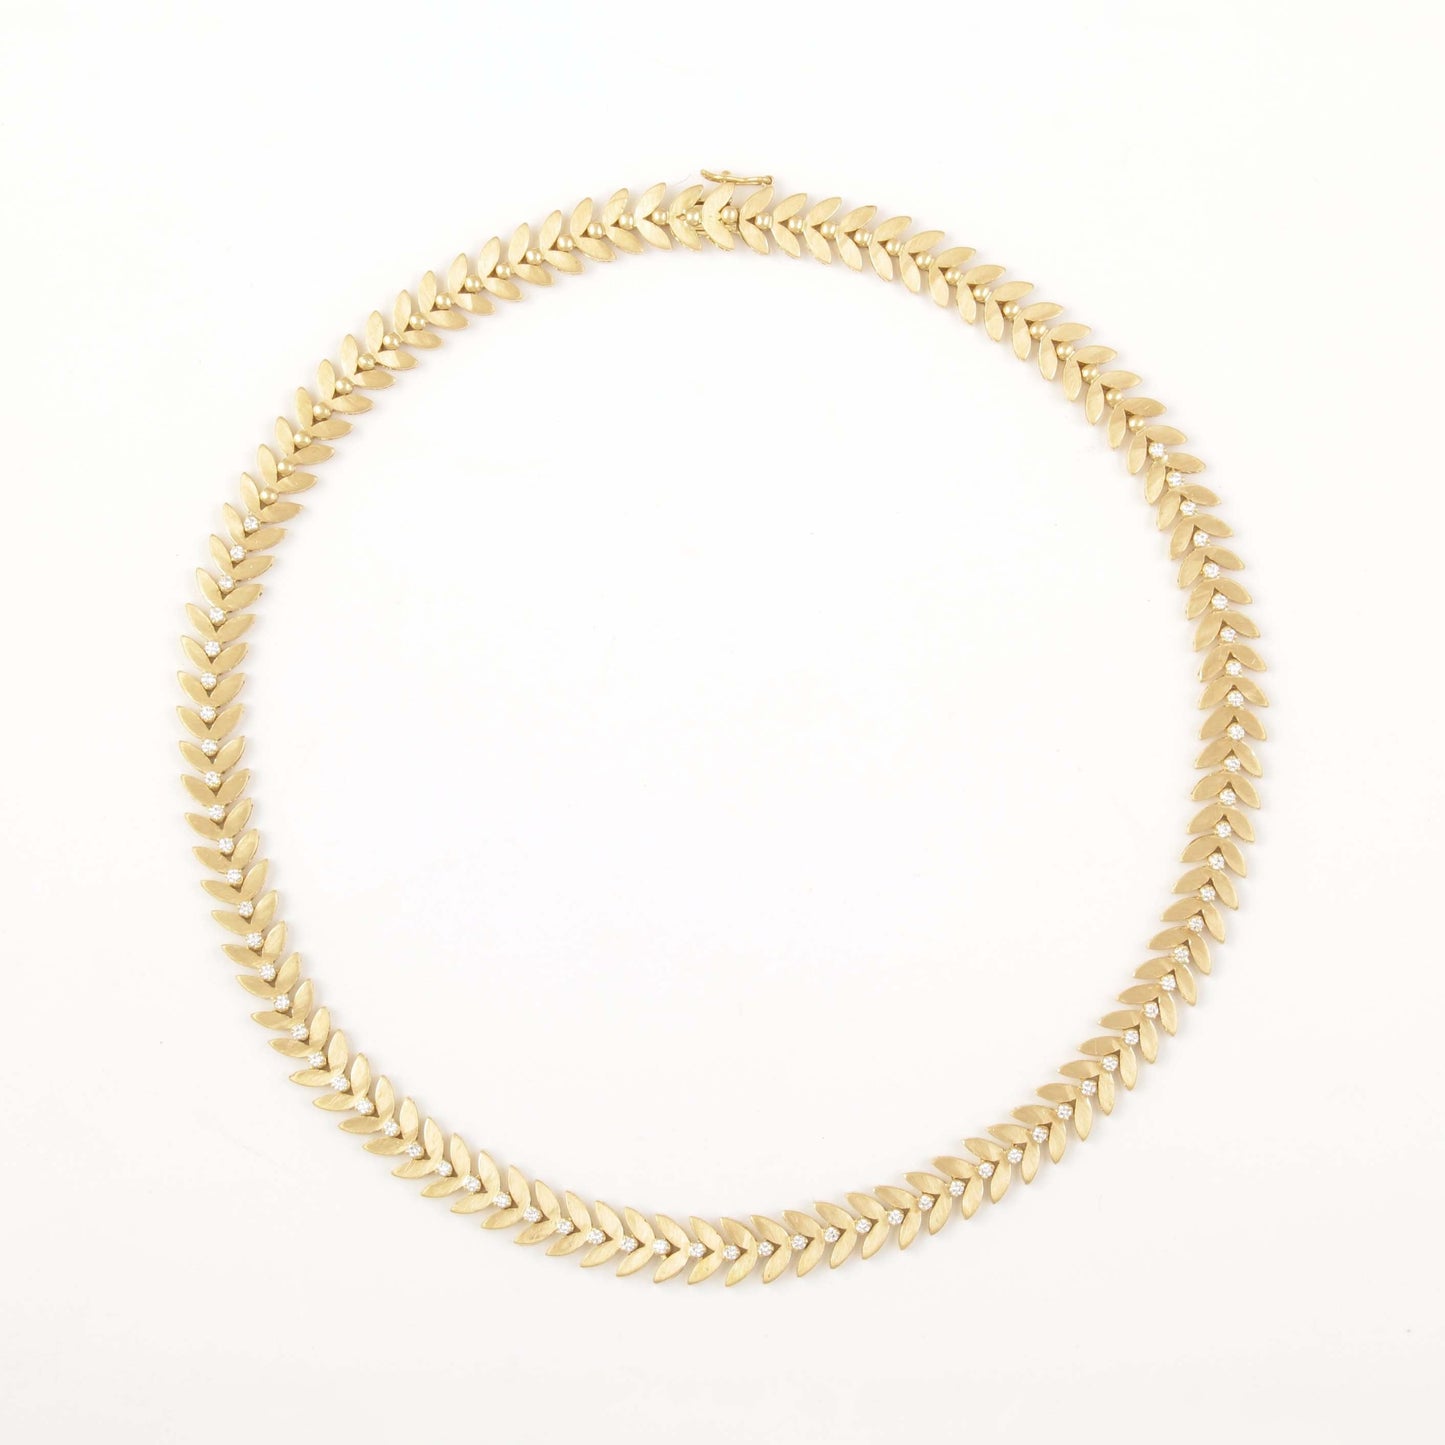 The Aranya Leaf Series Gold and Diamond Necklace by Rasvihar